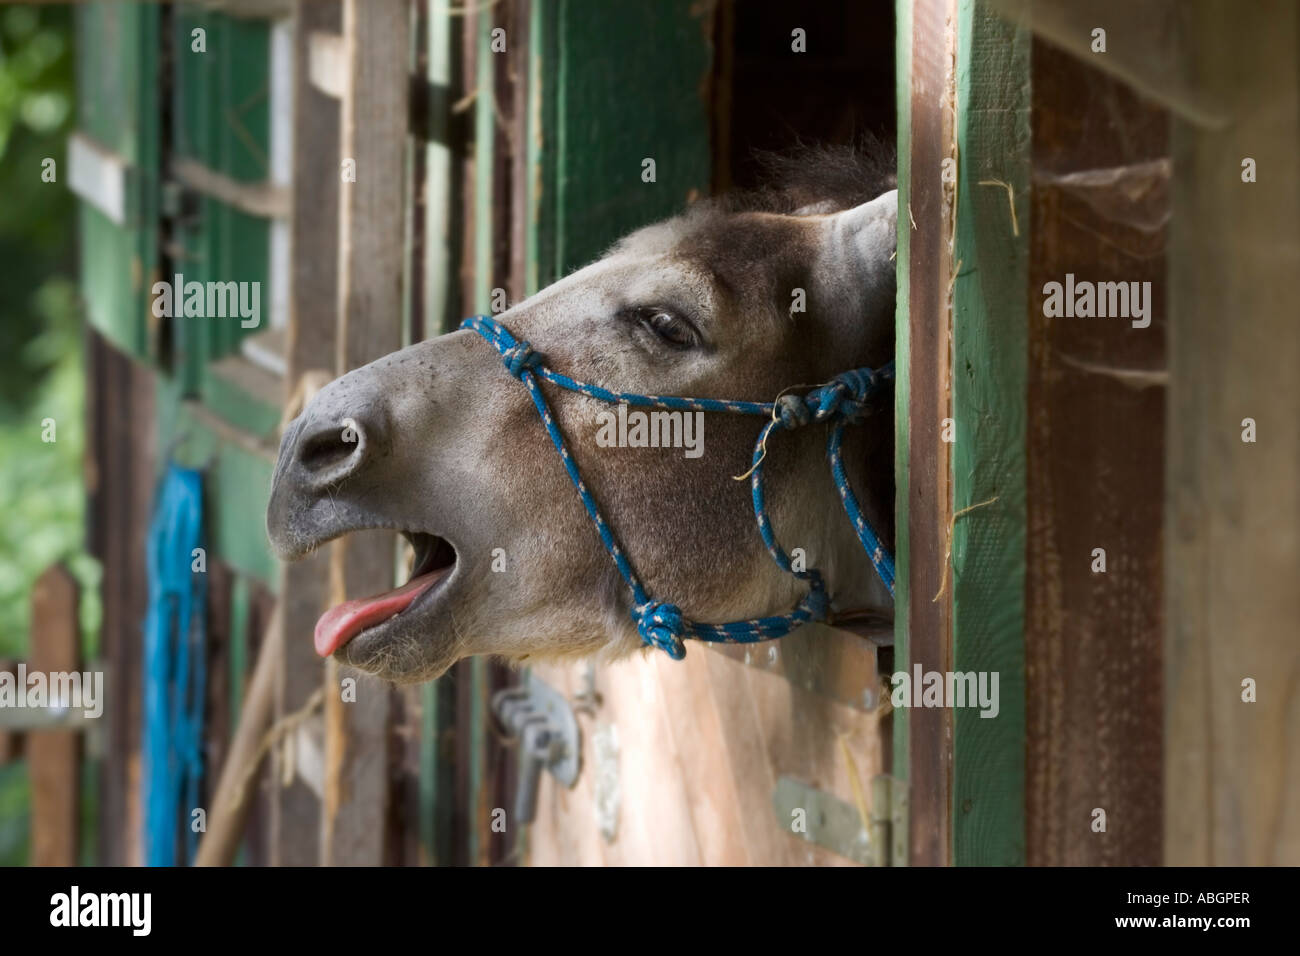 Donkey in stable calling Equus asinus Qermany Stock Photo